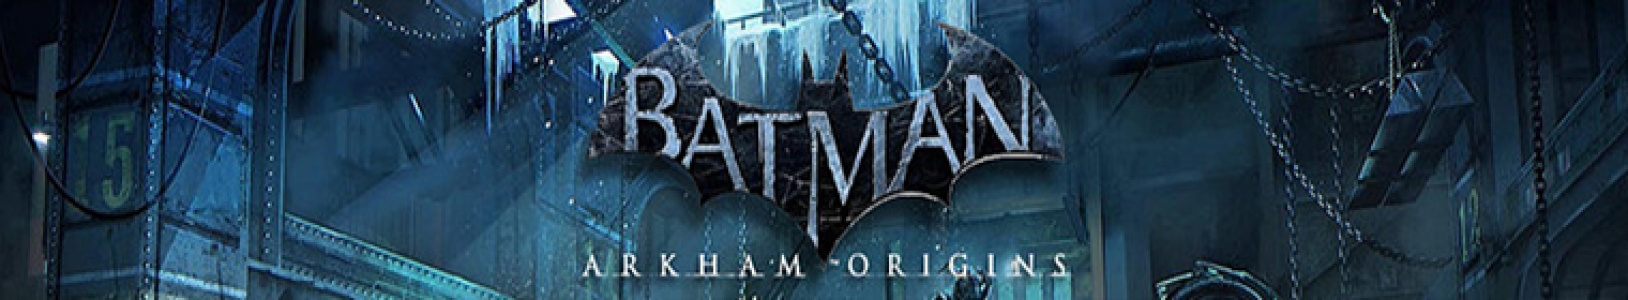 Batman: Arkham Origins banner